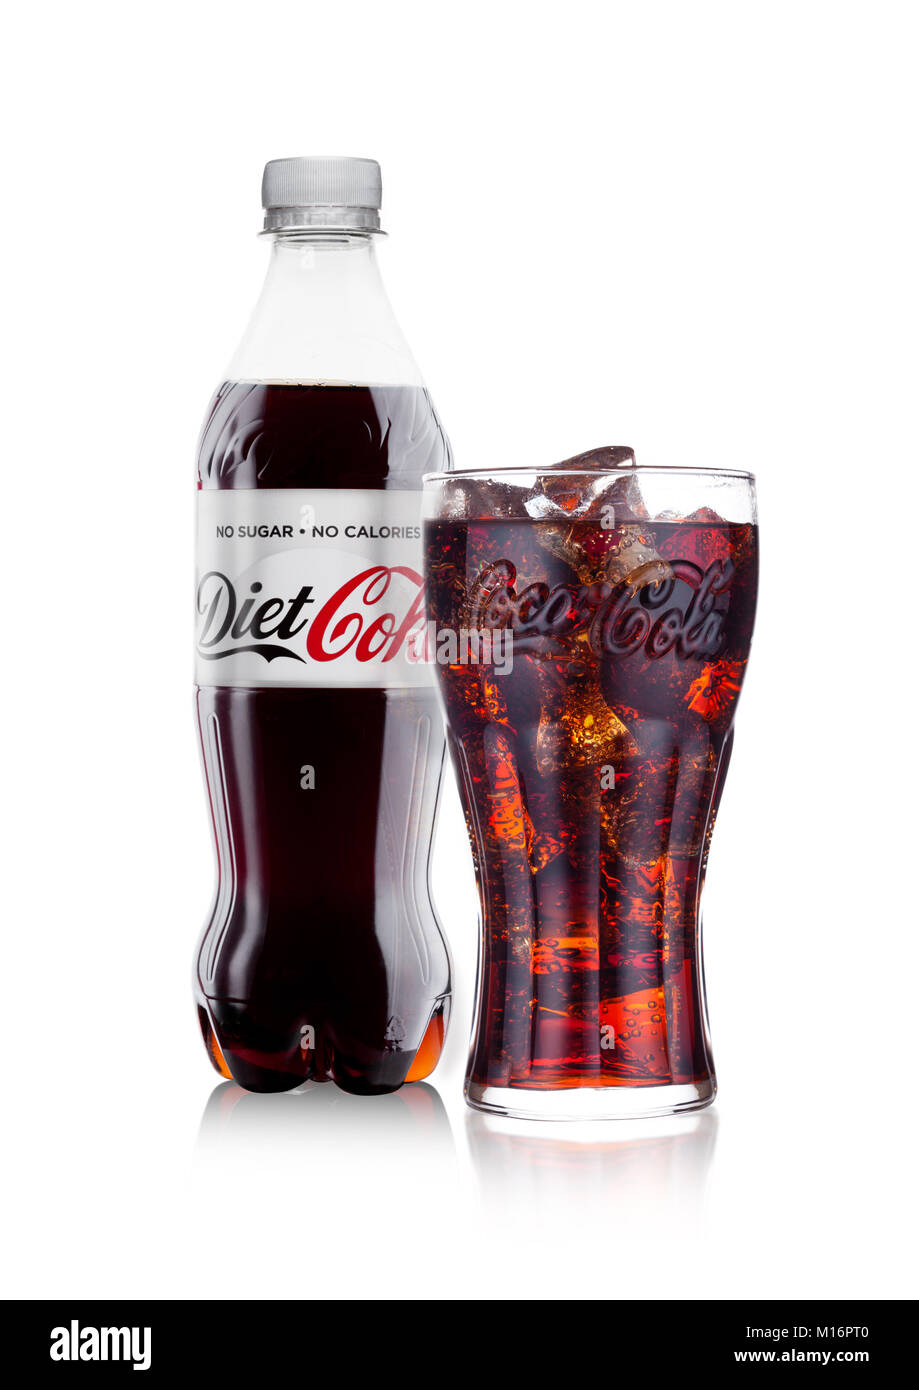 https://c8.alamy.com/comp/M16PT0/london-uk-january-24-2018-bottle-and-glass-of-diet-coca-cola-on-white-M16PT0.jpg